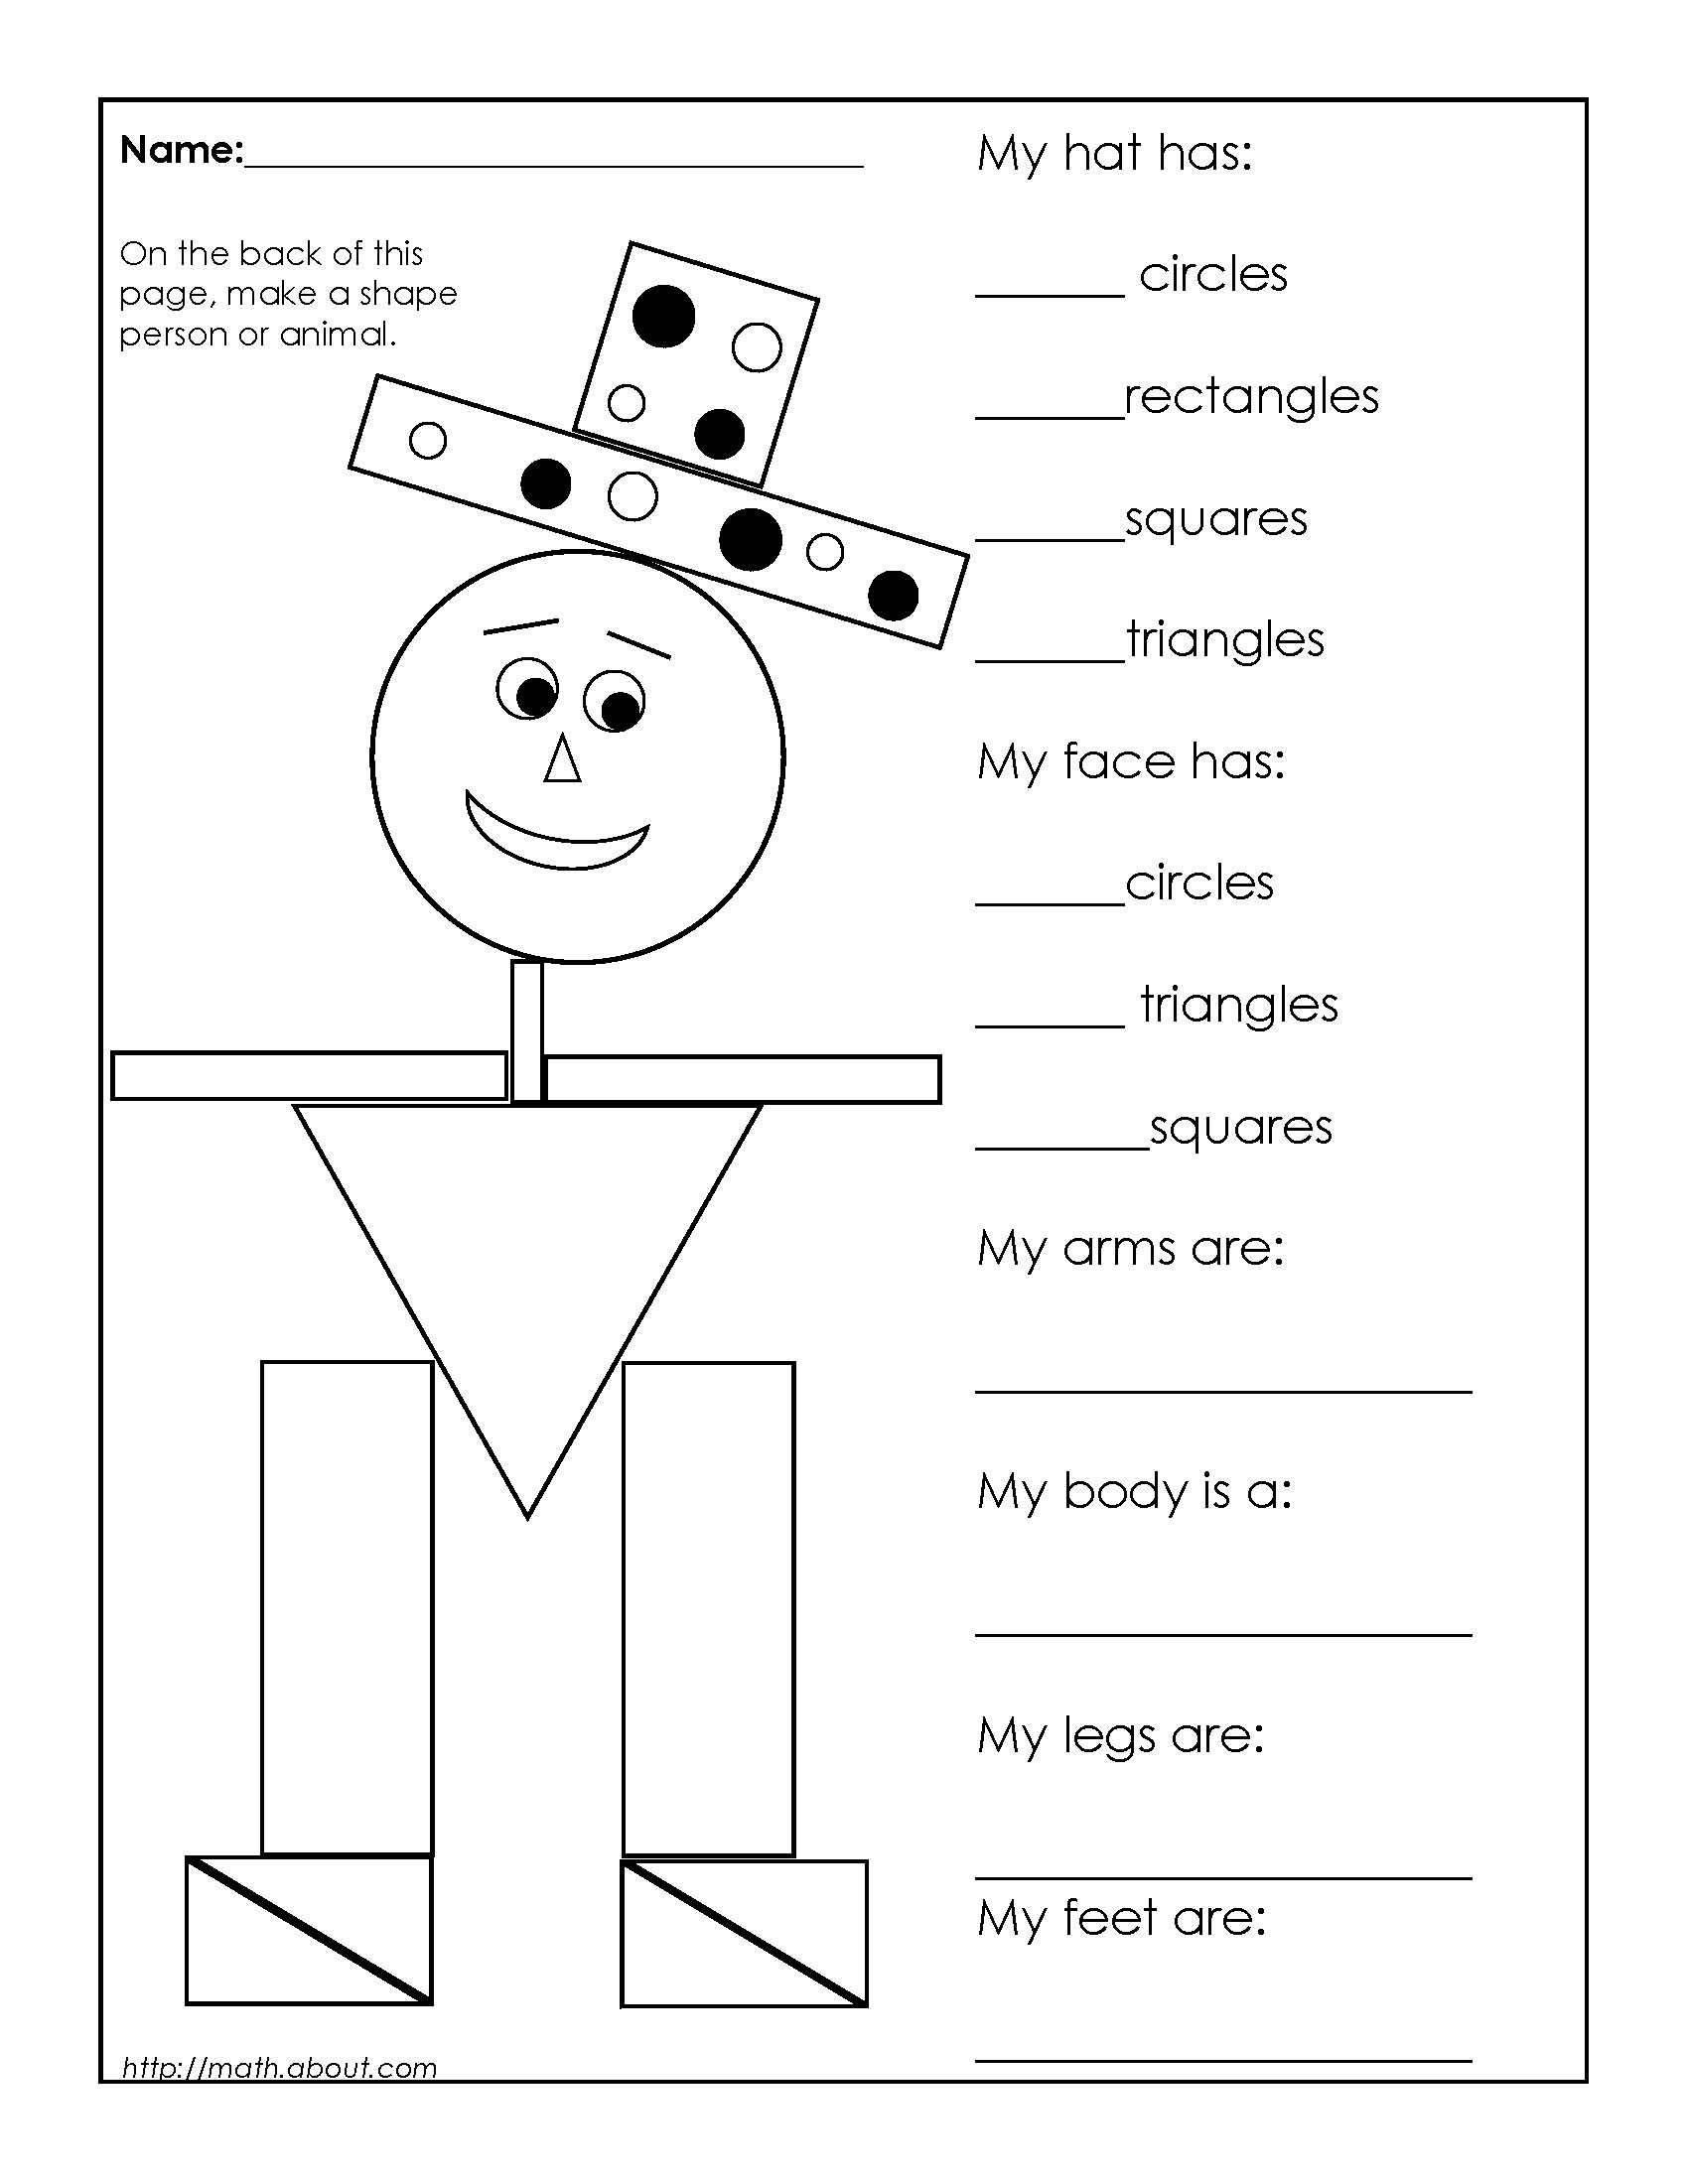 7 Images of Second Grade Shapes Worksheets